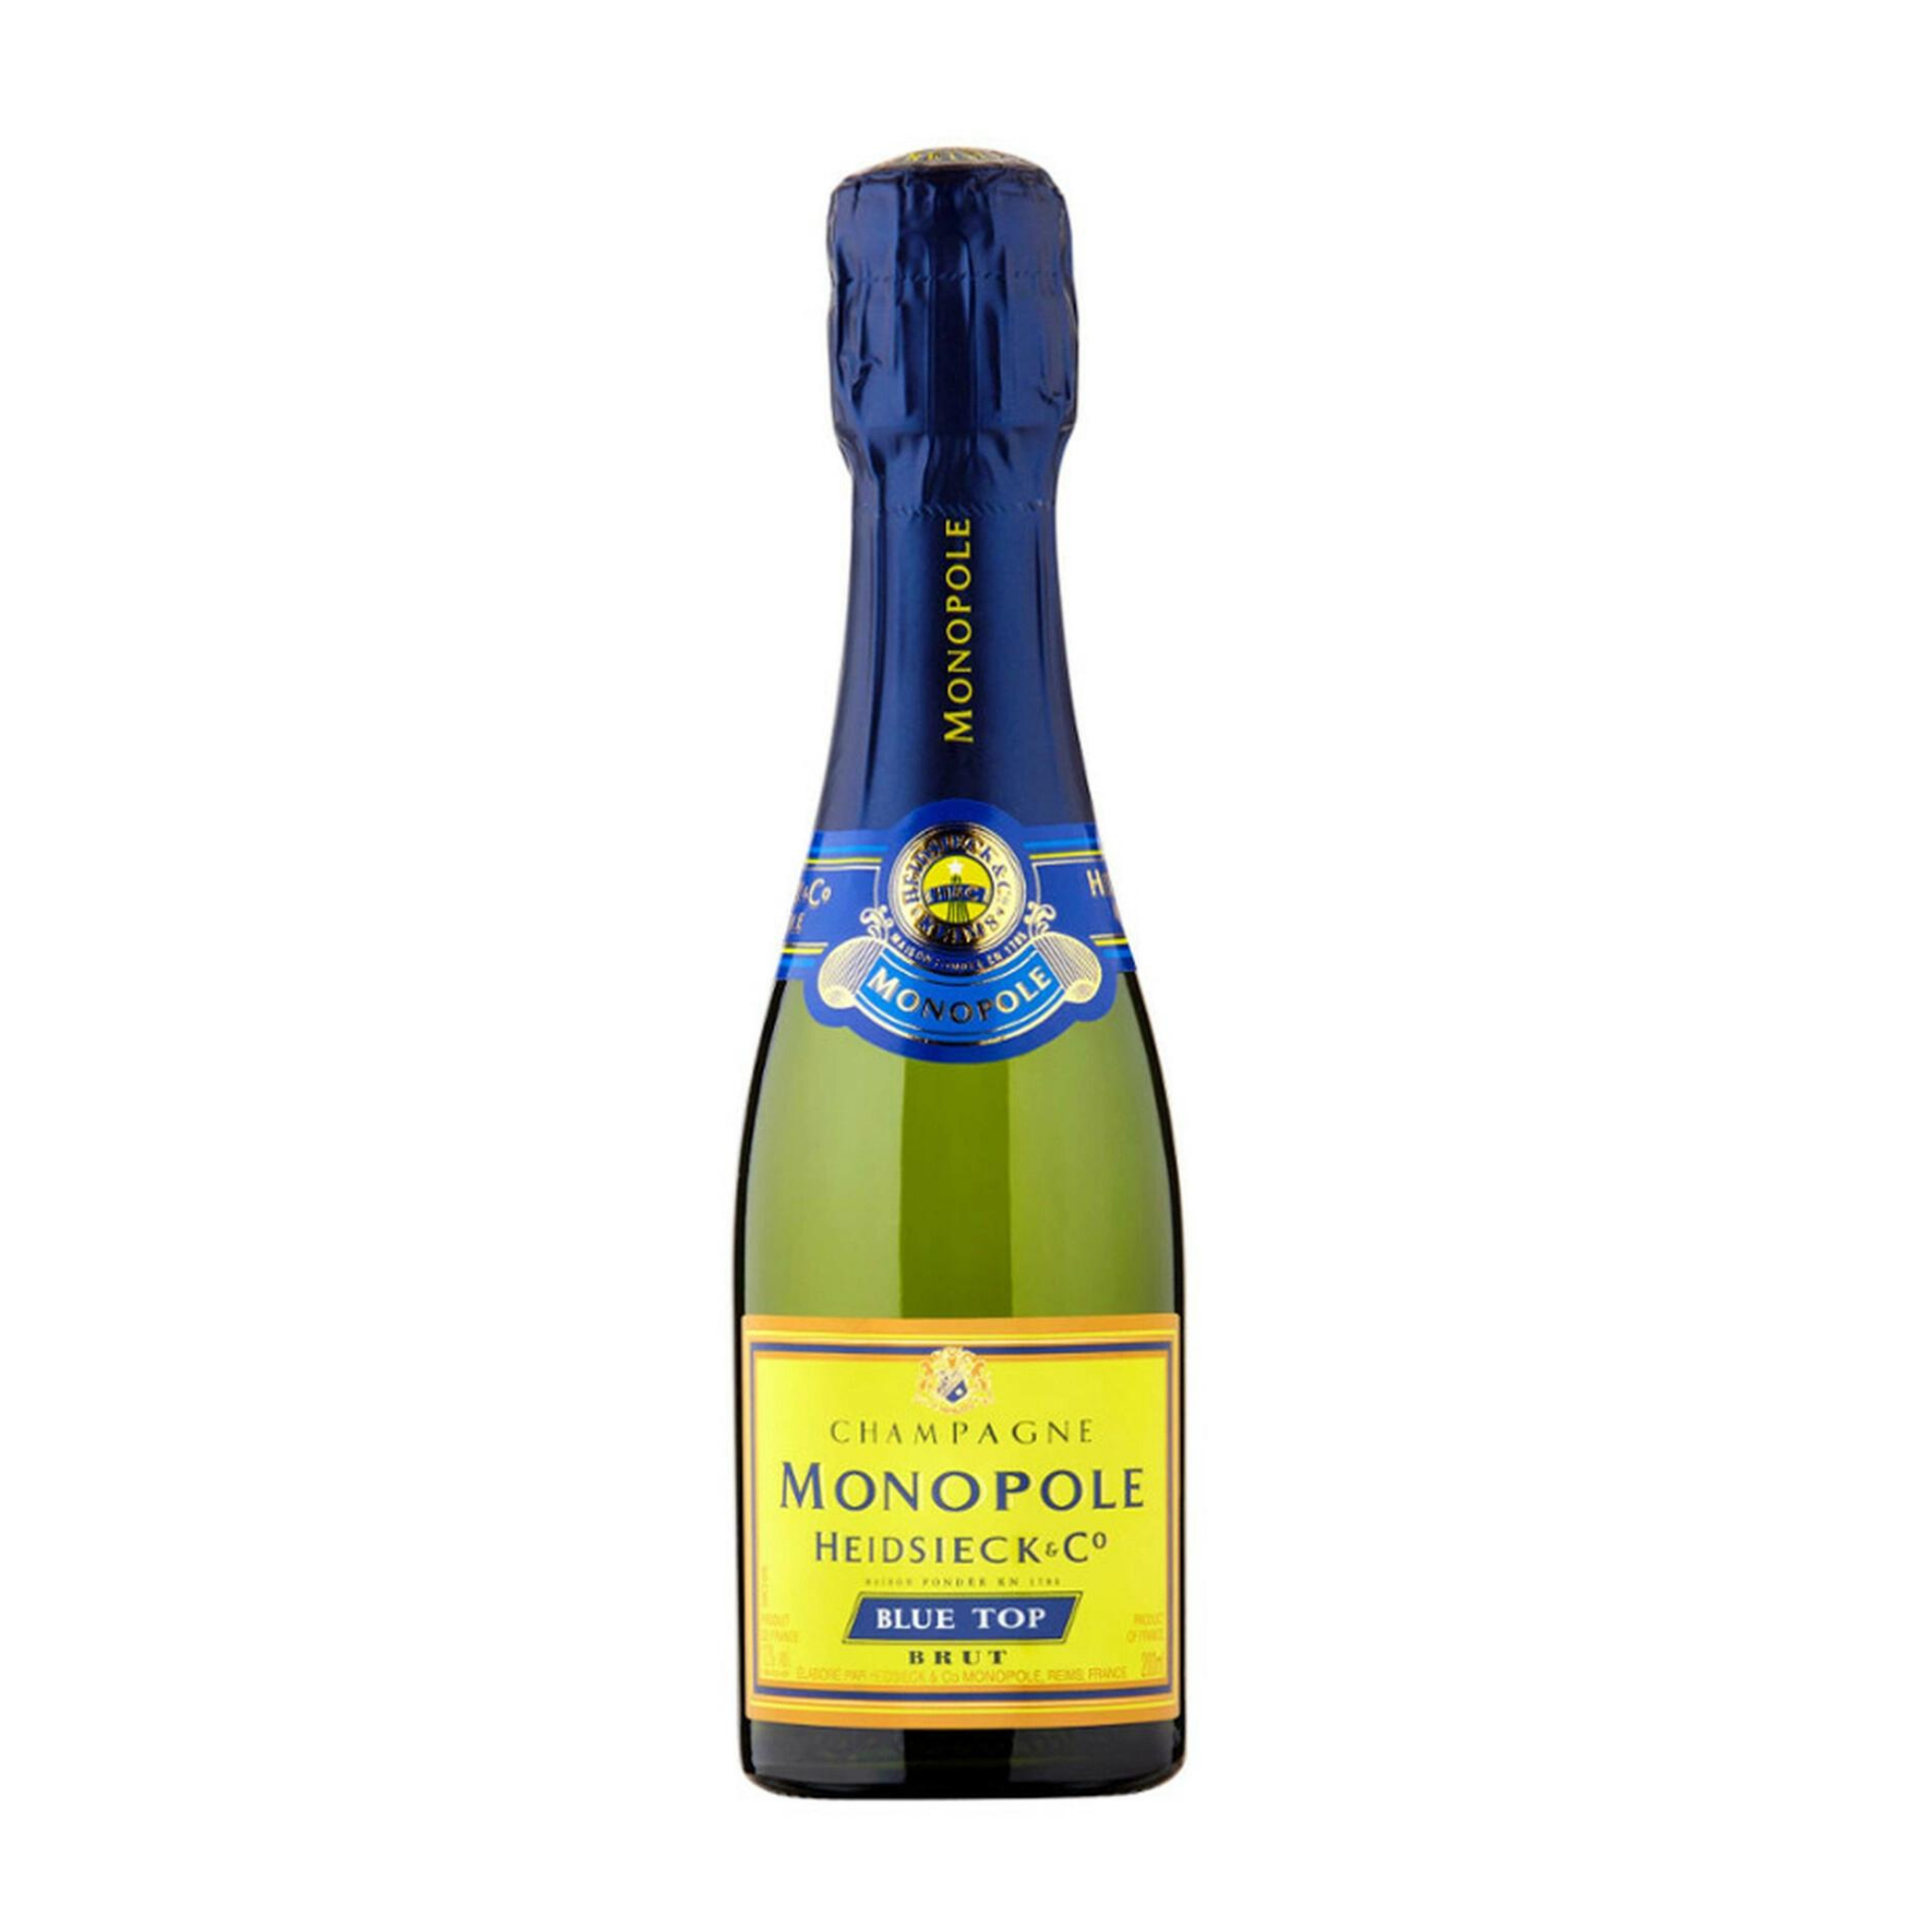 Champagne Monopole Wine – Co. Brut Top Blue Grand Mini Heidsieck Cellar &